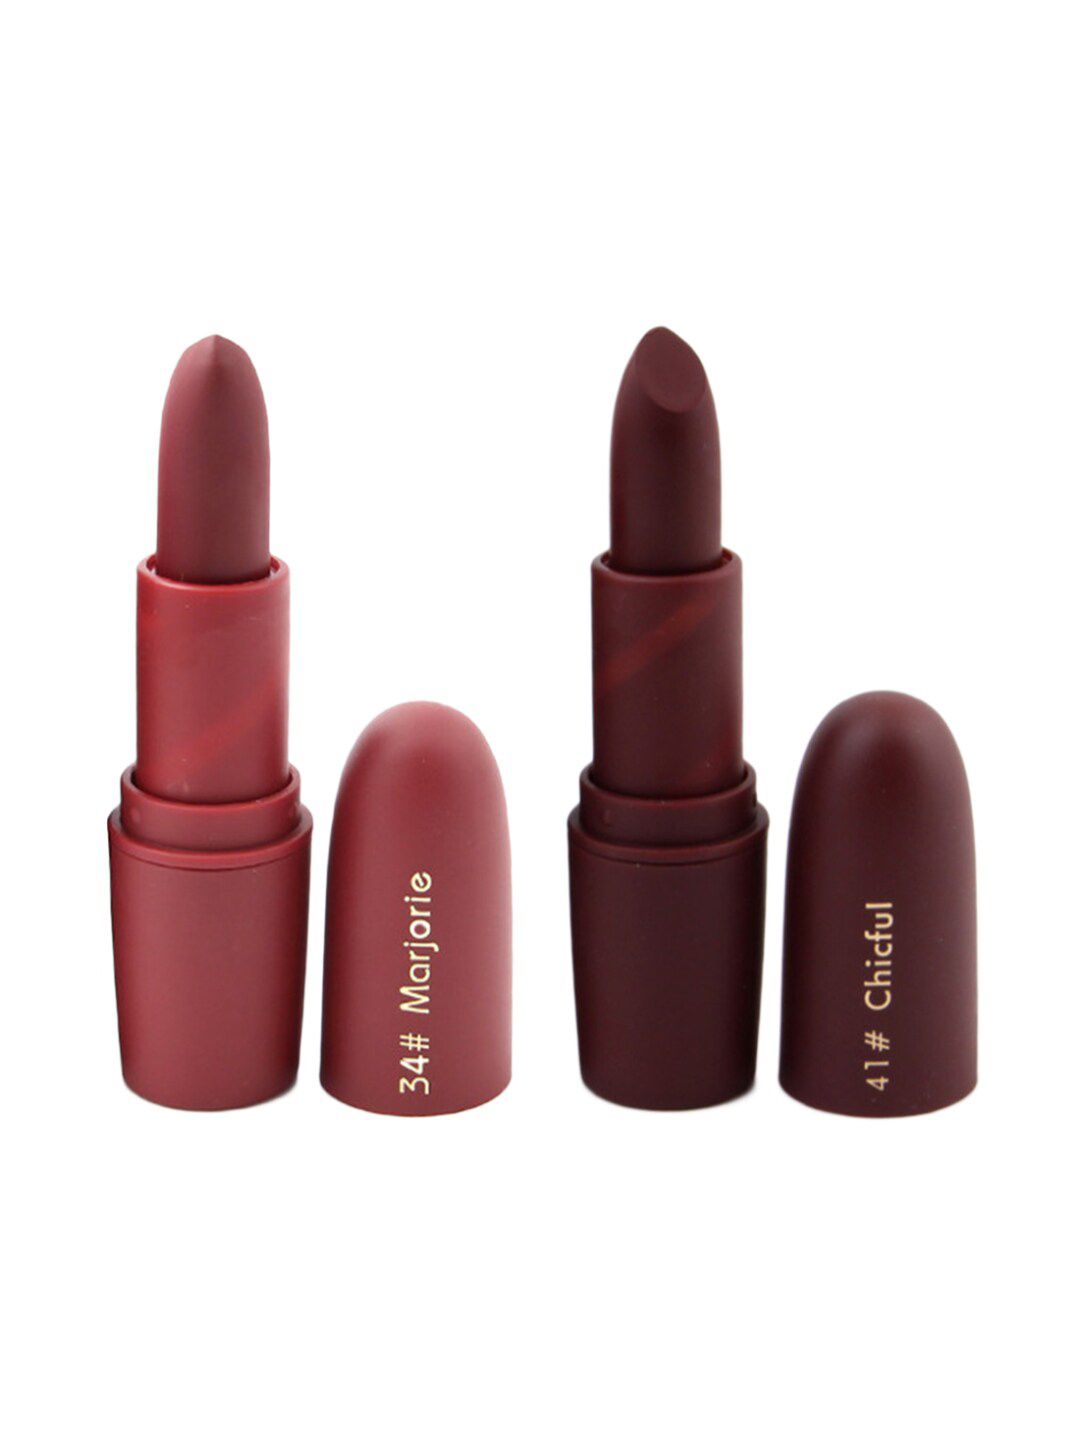 MISS ROSE Set of 2 Matte Creamy Bullet Lipsticks - 34 Marjorie & 41 Chicful Price in India